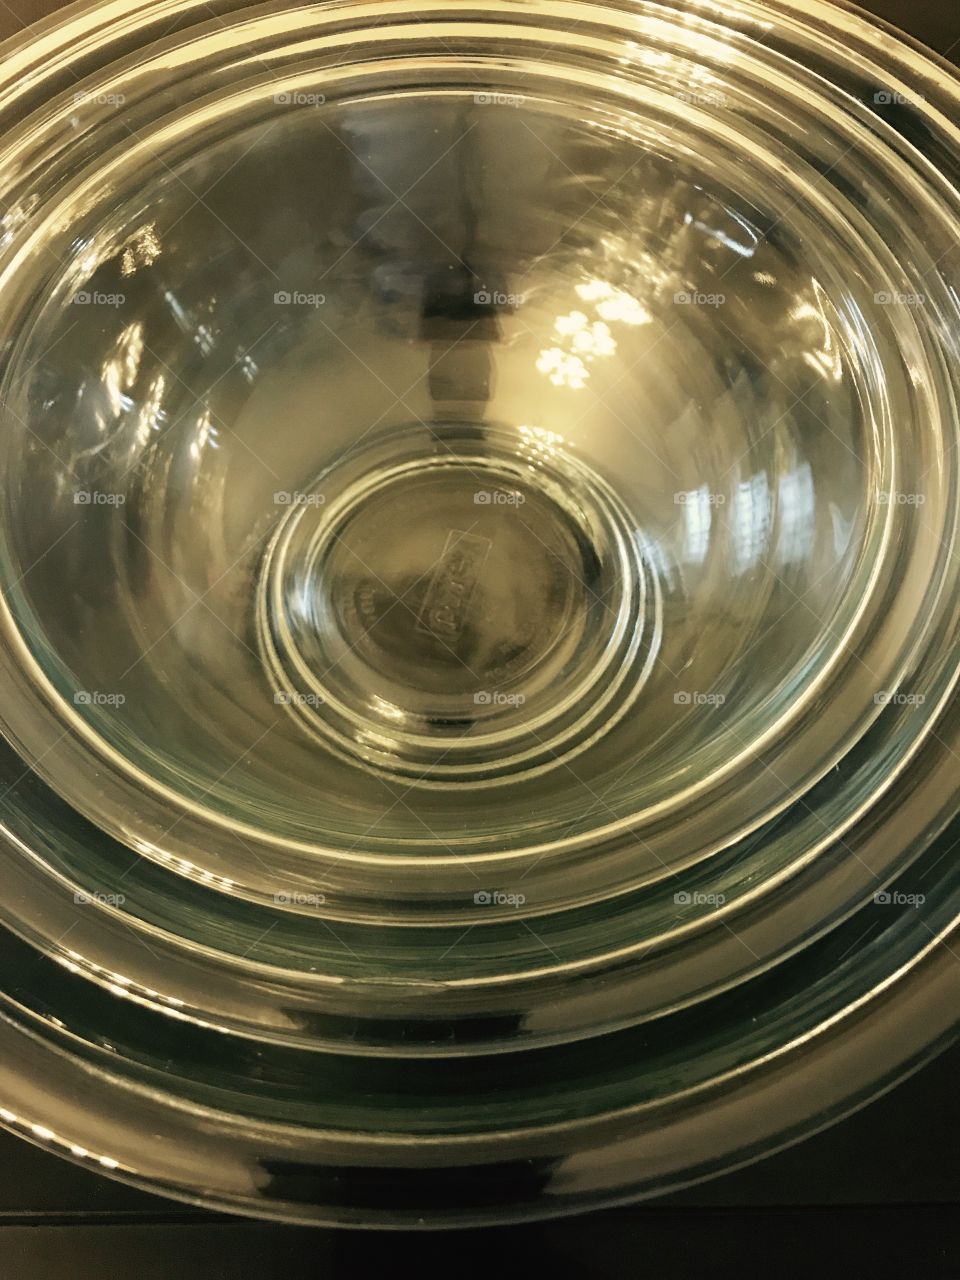 Glass mixing bowls